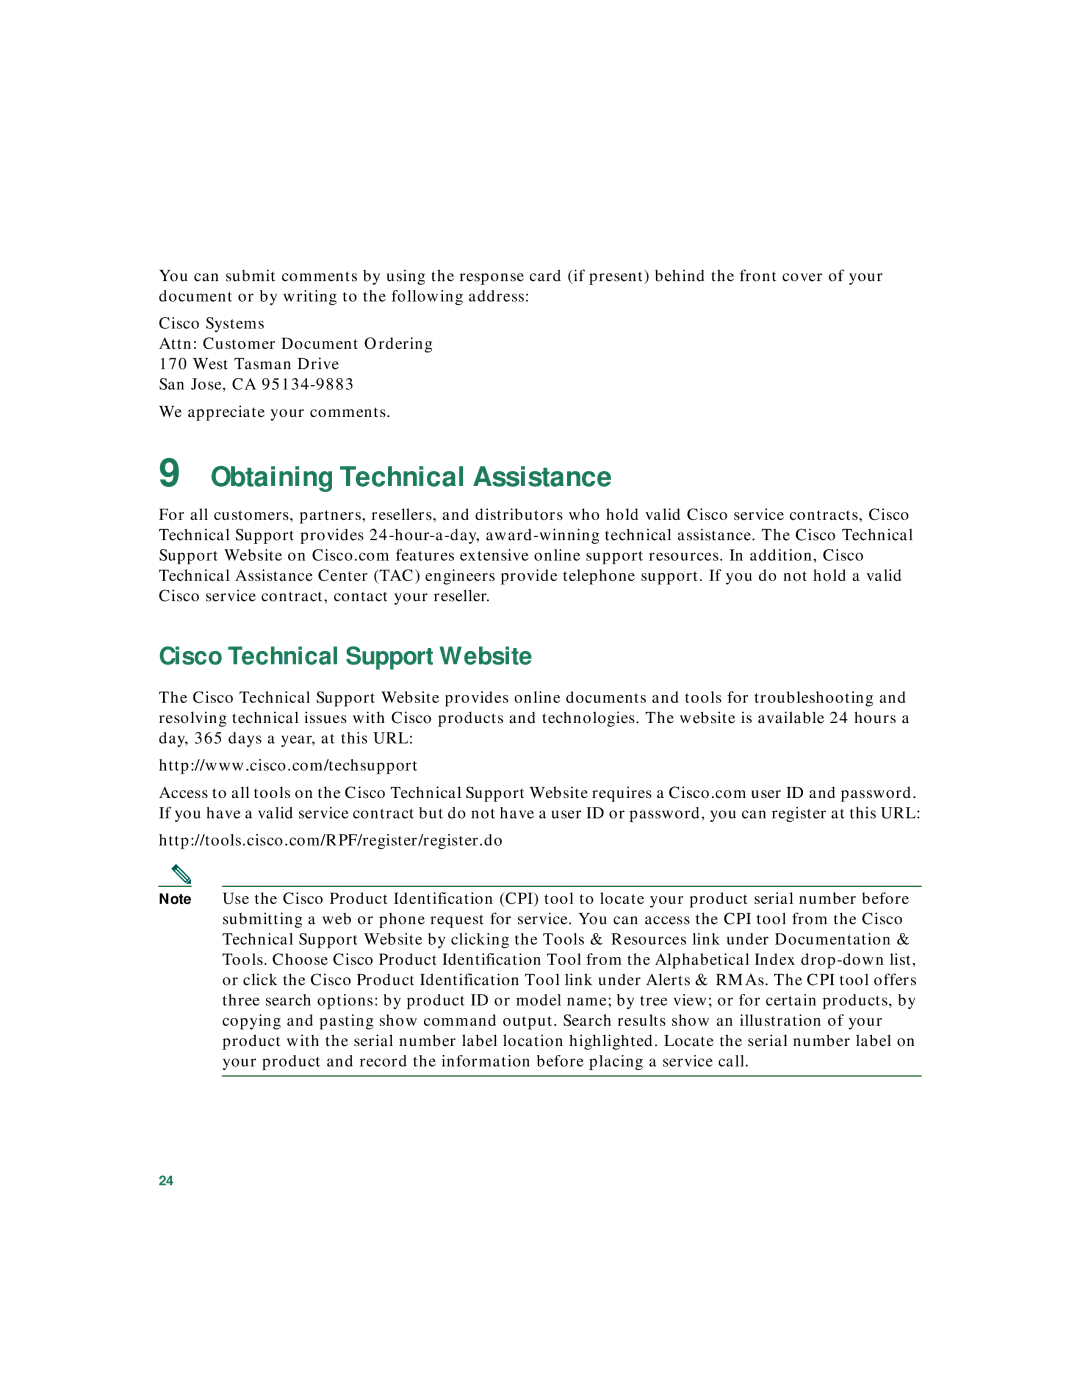 Panduit Catalyst 3550 warranty Obtaining Technical Assistance, Cisco Technical Support Website 